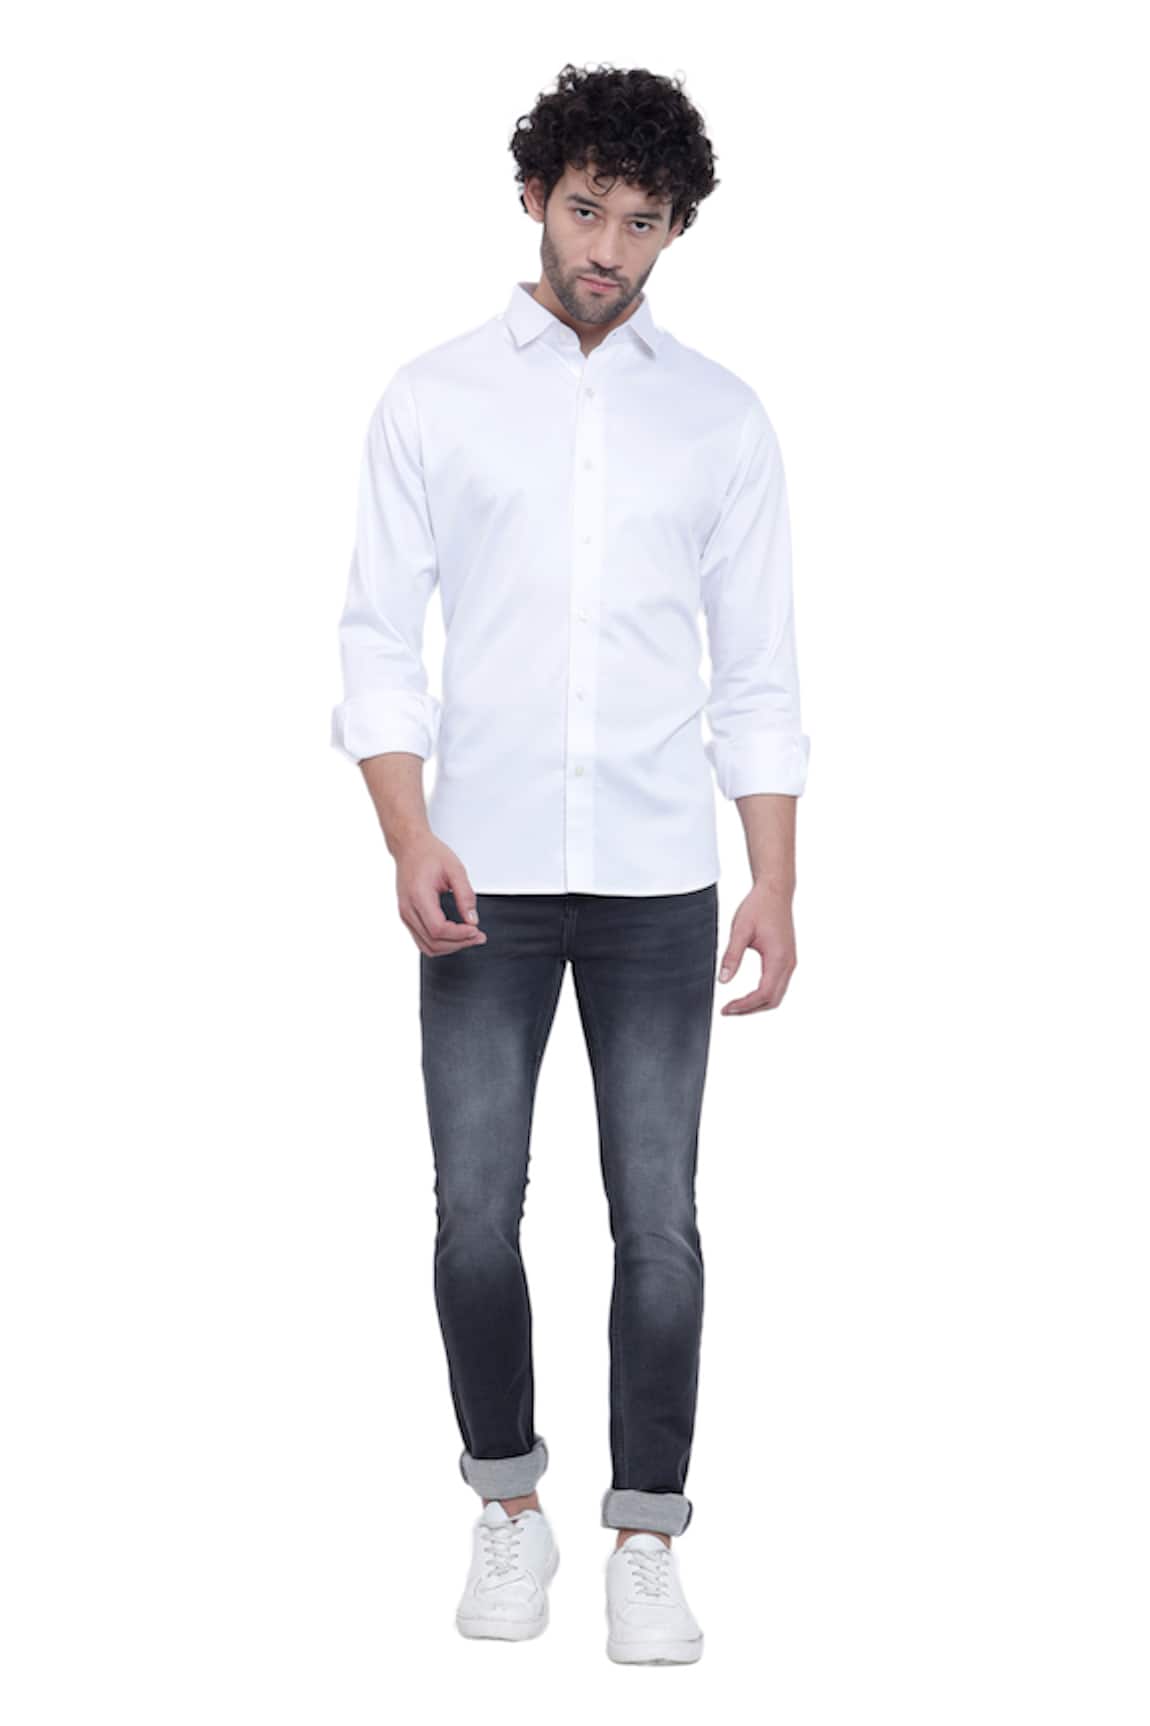 Armen & Co Cotton Full Sleeve Shirt